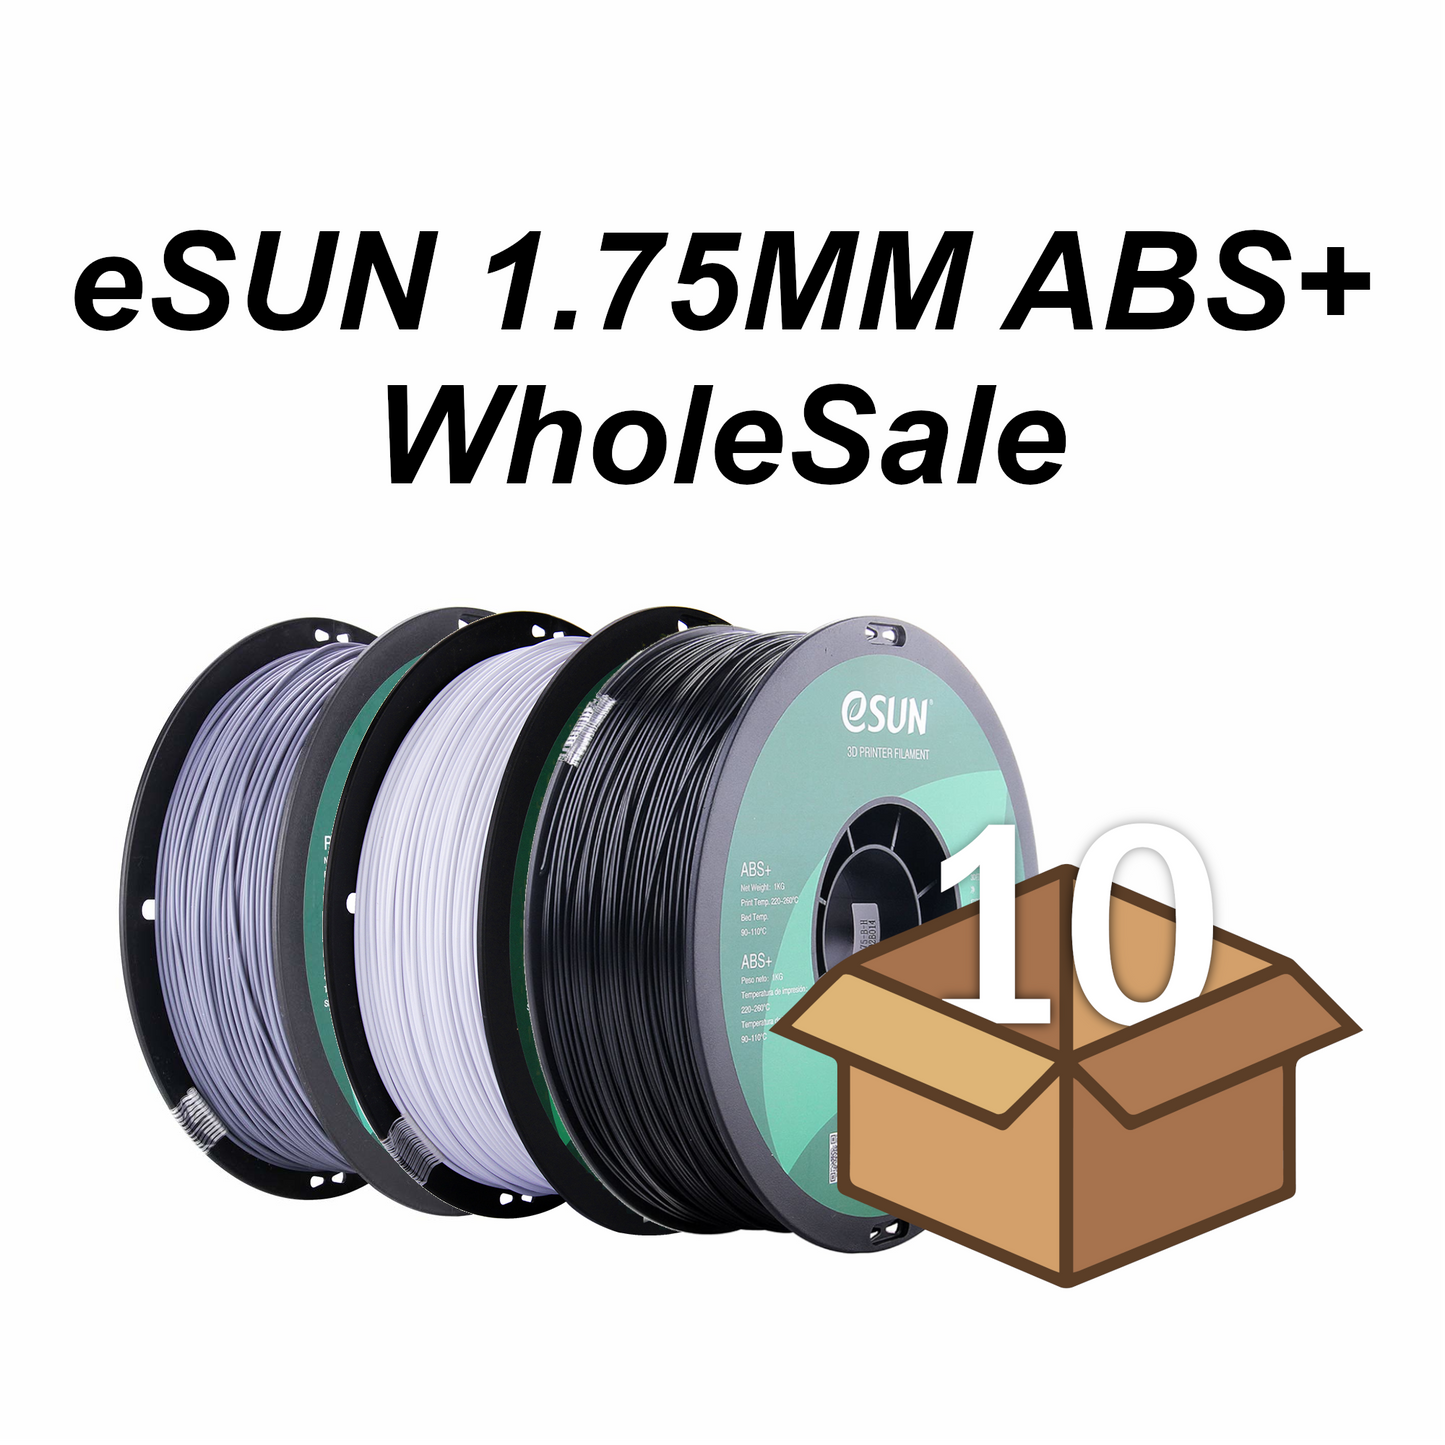 eSUN ABS+ Plus Wholesale Case